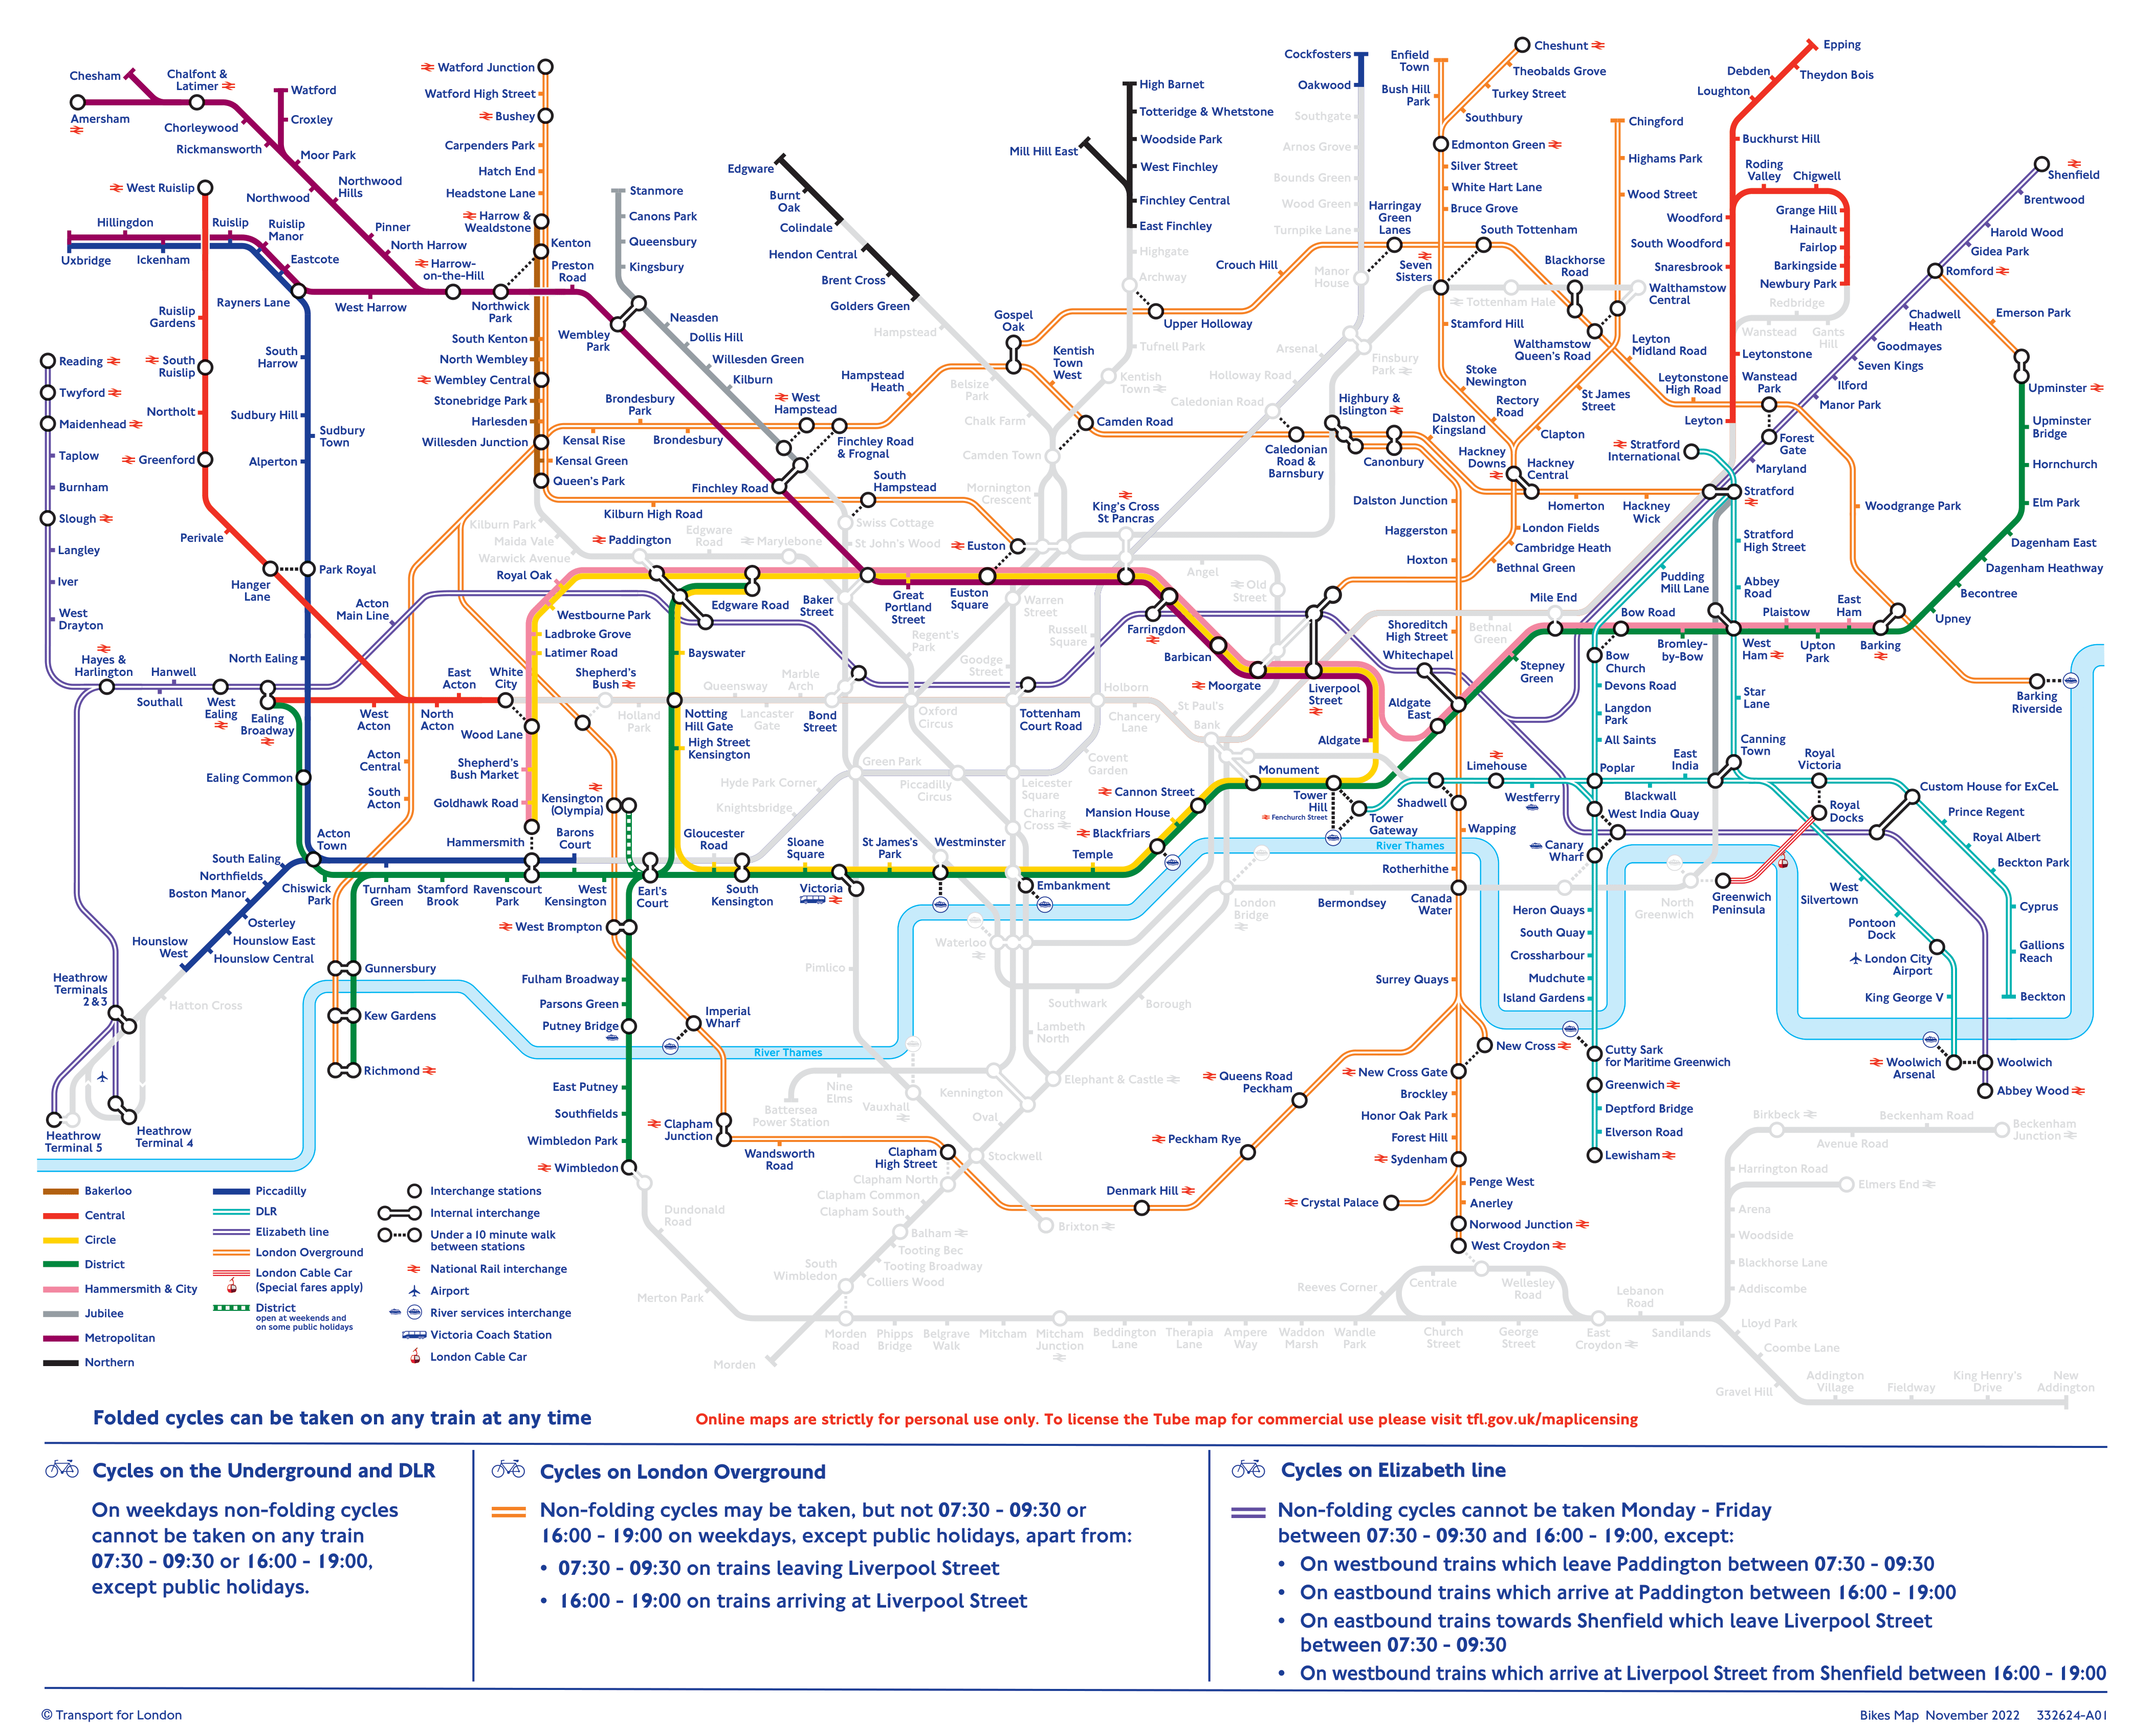 London underground map with new Elizabeth Line